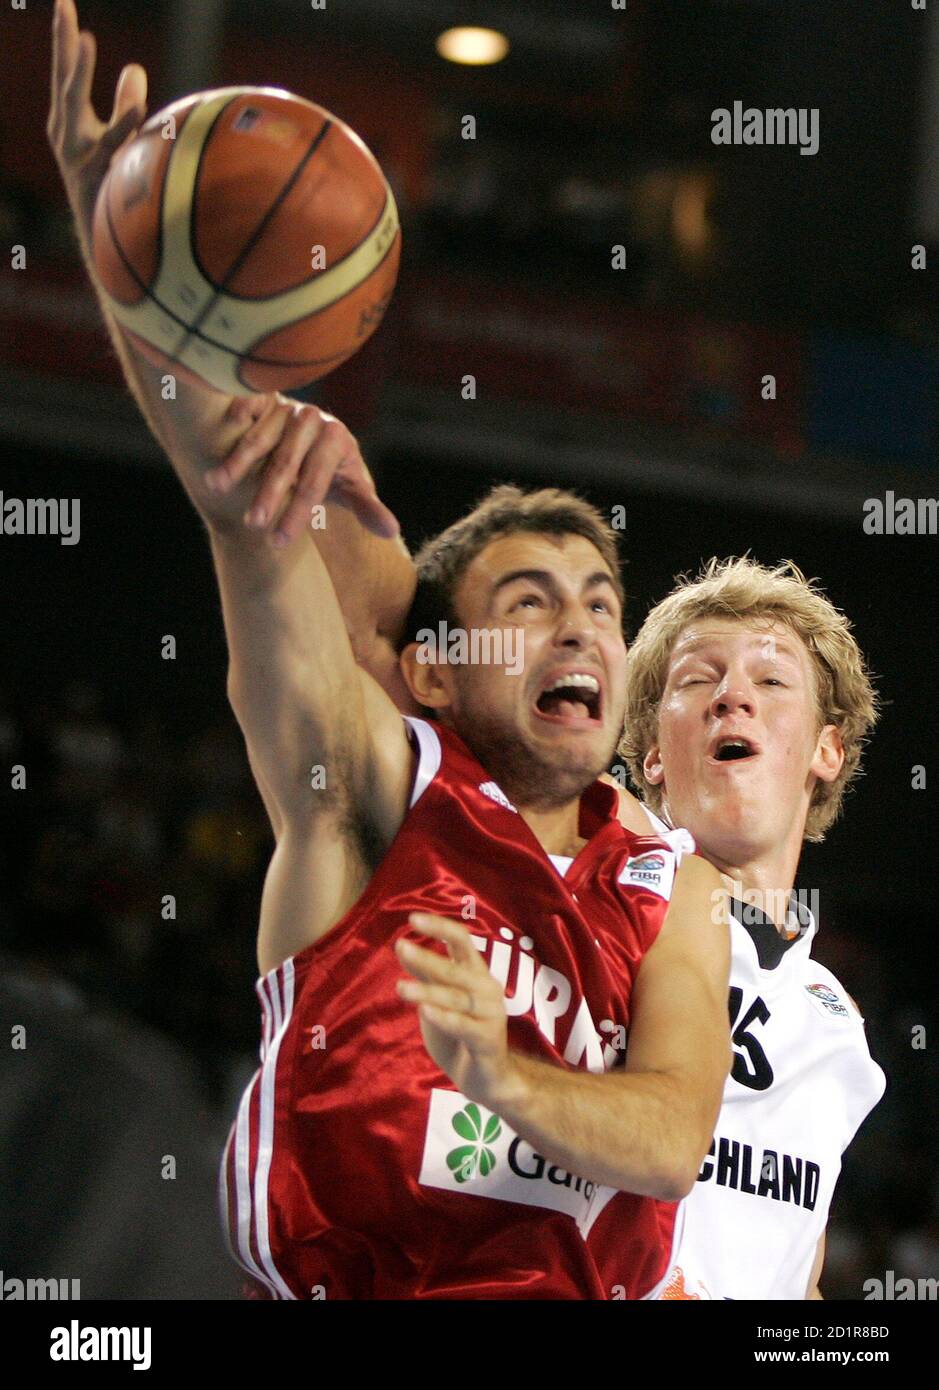 Turkey's Ender Arslan (L) tries to score past Germany's Jan-Hendrik Jagla during their European Basketball Championships game in Palma de Mallorca September 4, 2007. REUTERS/Dani Cardona (SPAIN) Stock Photo